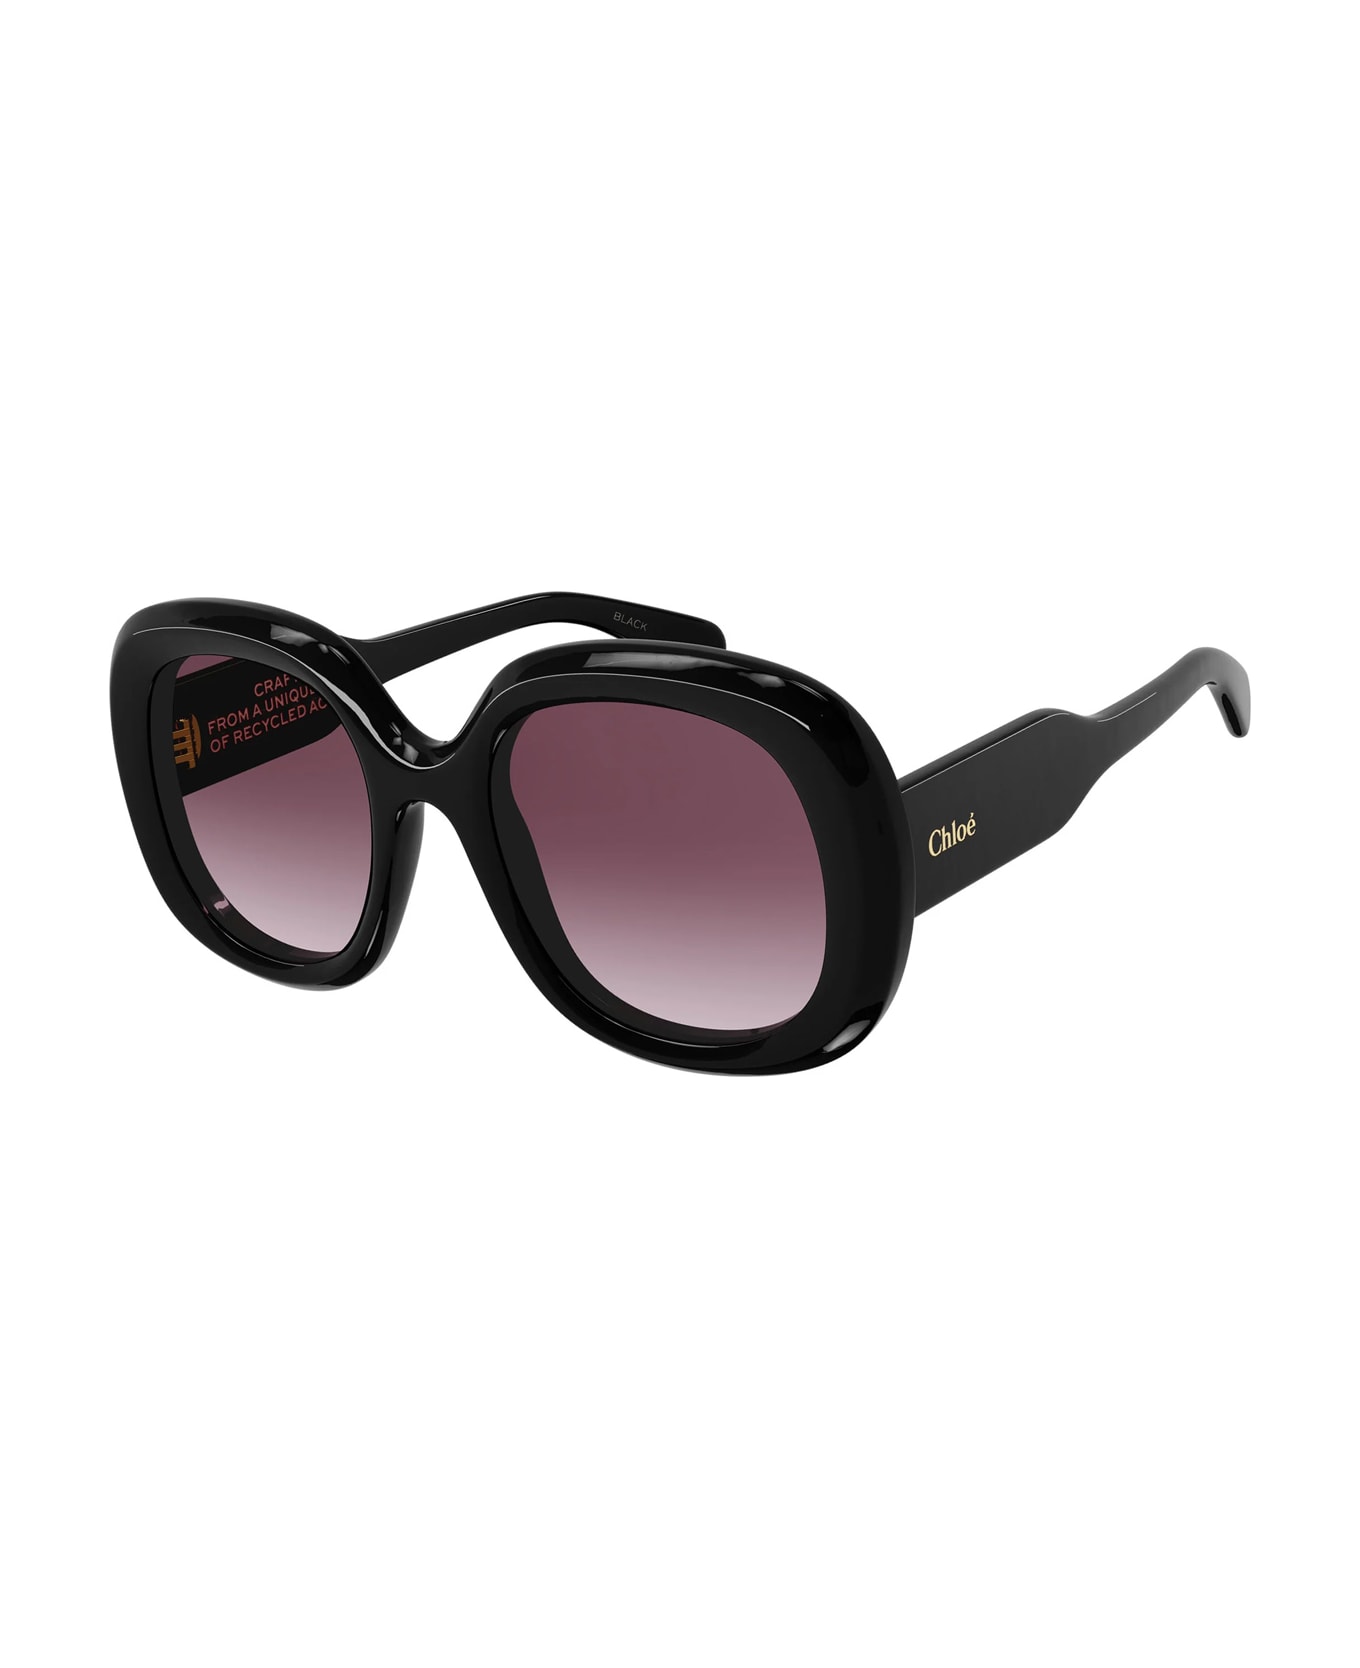 Chloé Black Gayia Sunglasses - Black